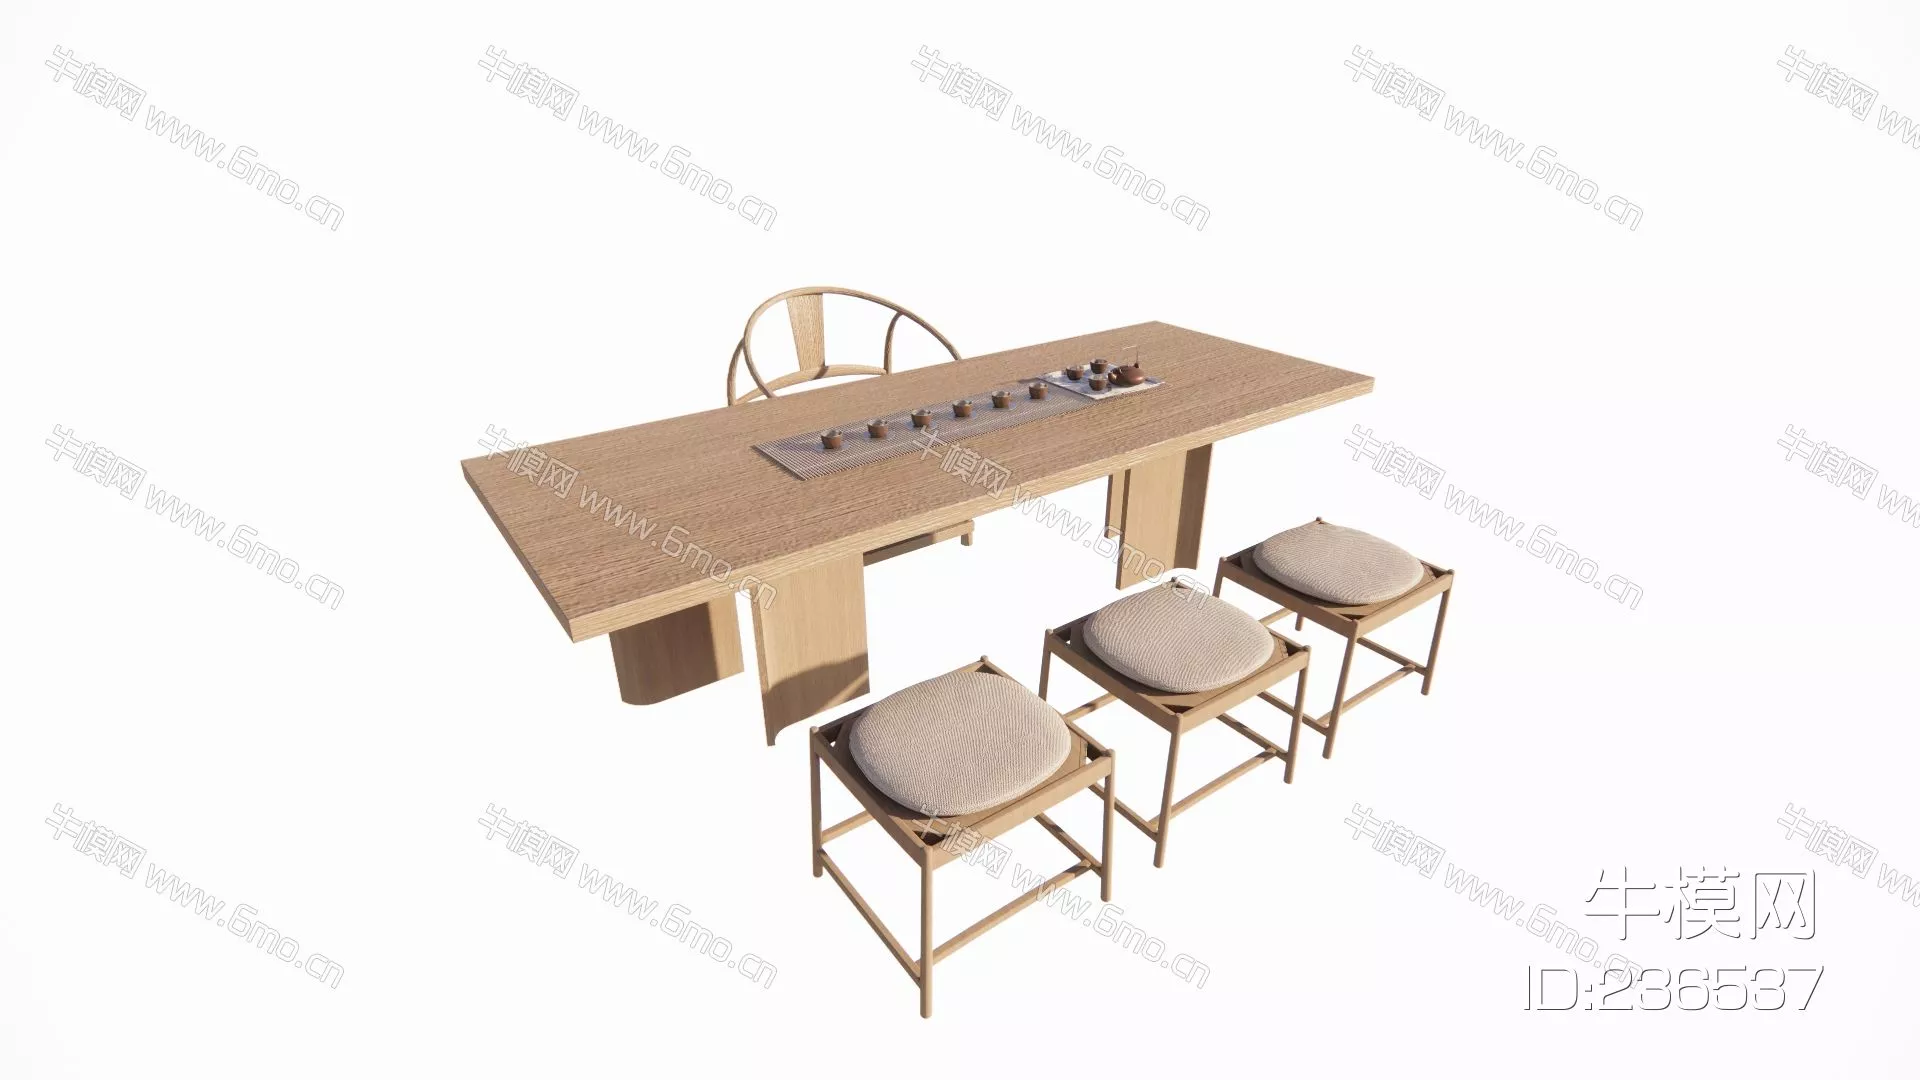 CHINESE TEA TABLE SET - SKETCHUP 3D MODEL - ENSCAPE - 236537